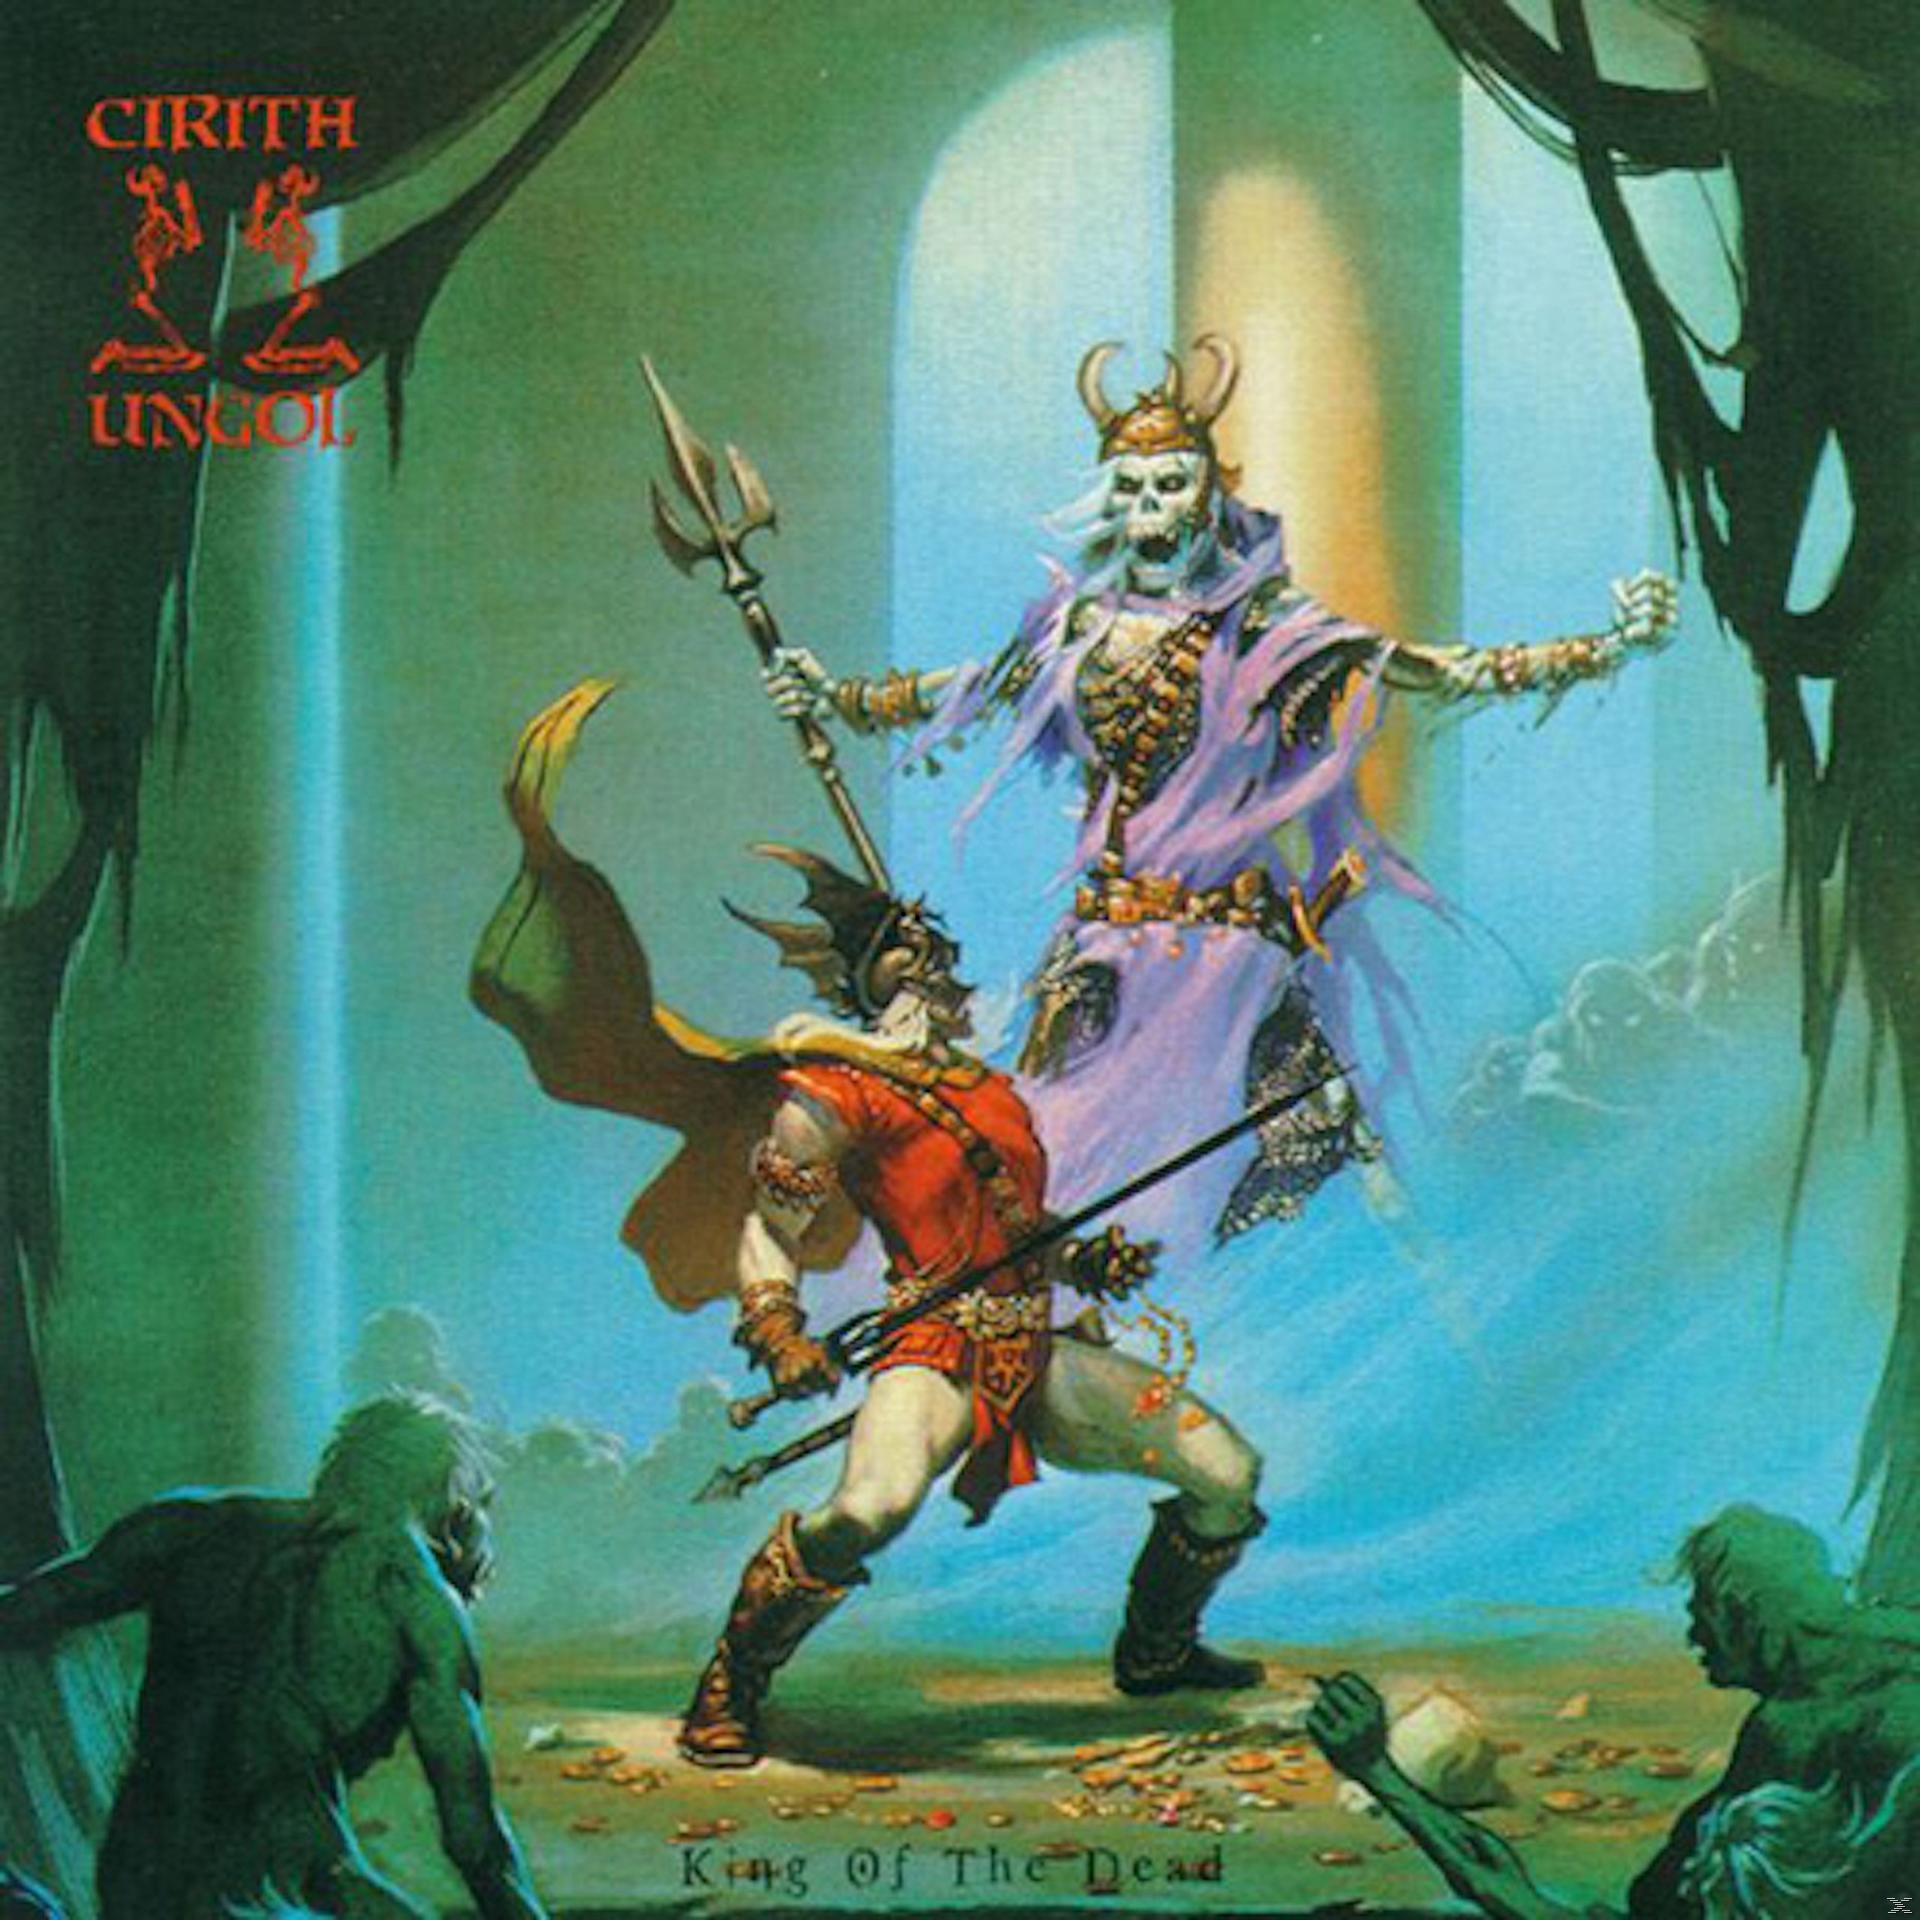 Vinyl Ed Dead-180g - (Vinyl) of - King Black the Cirith Ungol Ltd